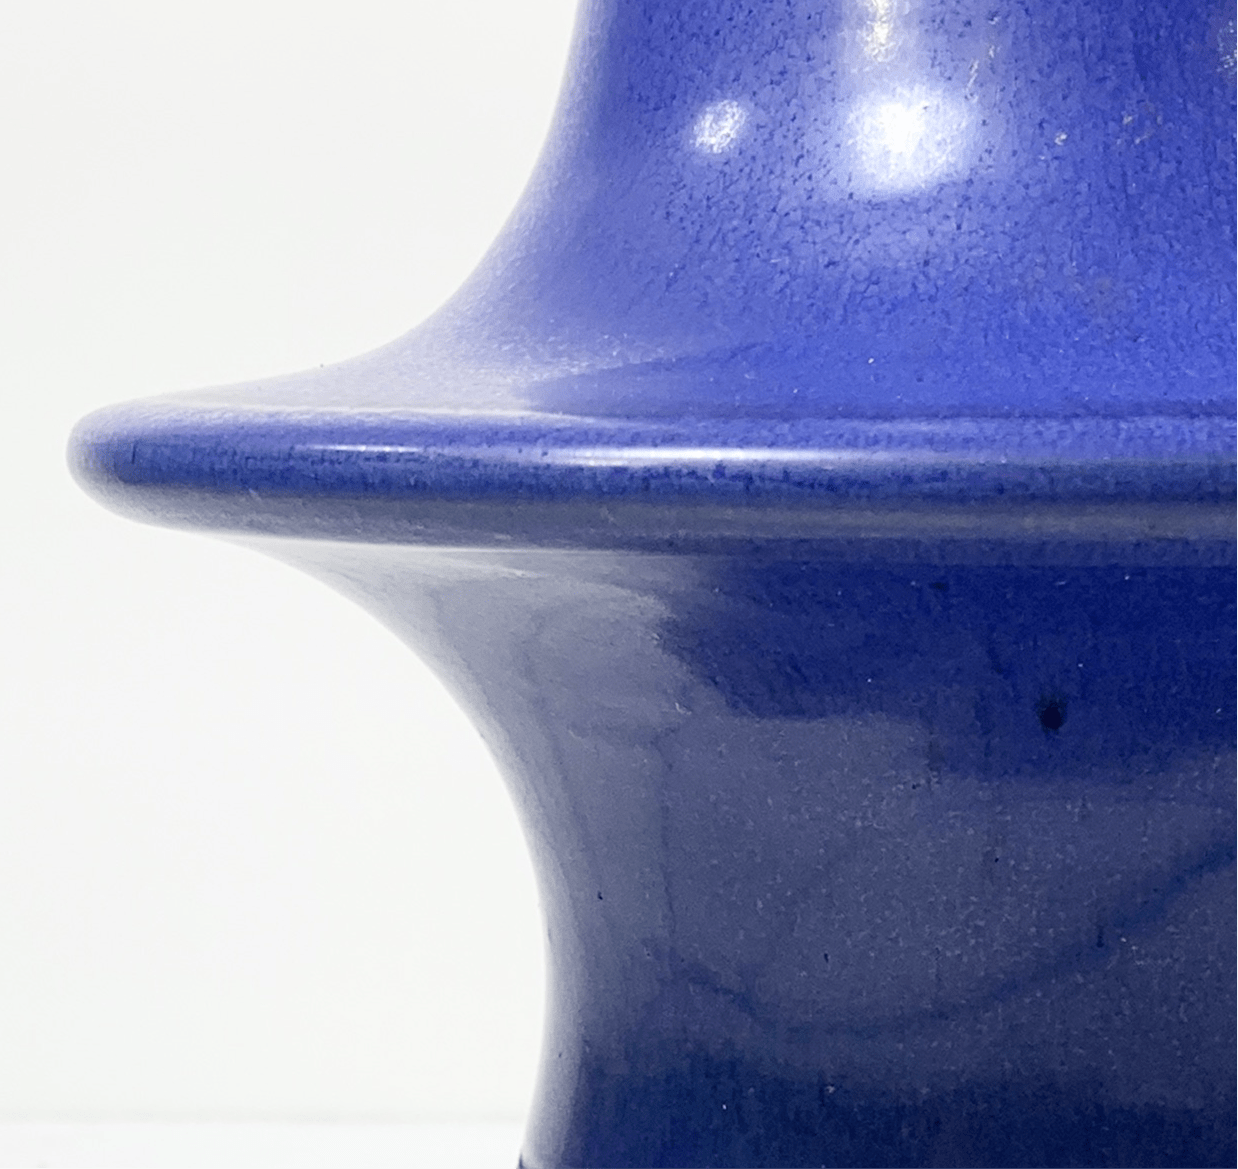 Danish Haresfur Pottery Blue UFO Table Lamp Palshus Ceramic Vintage Scandinavian Lighting Retro Atomic Era Design - Scandiwegians